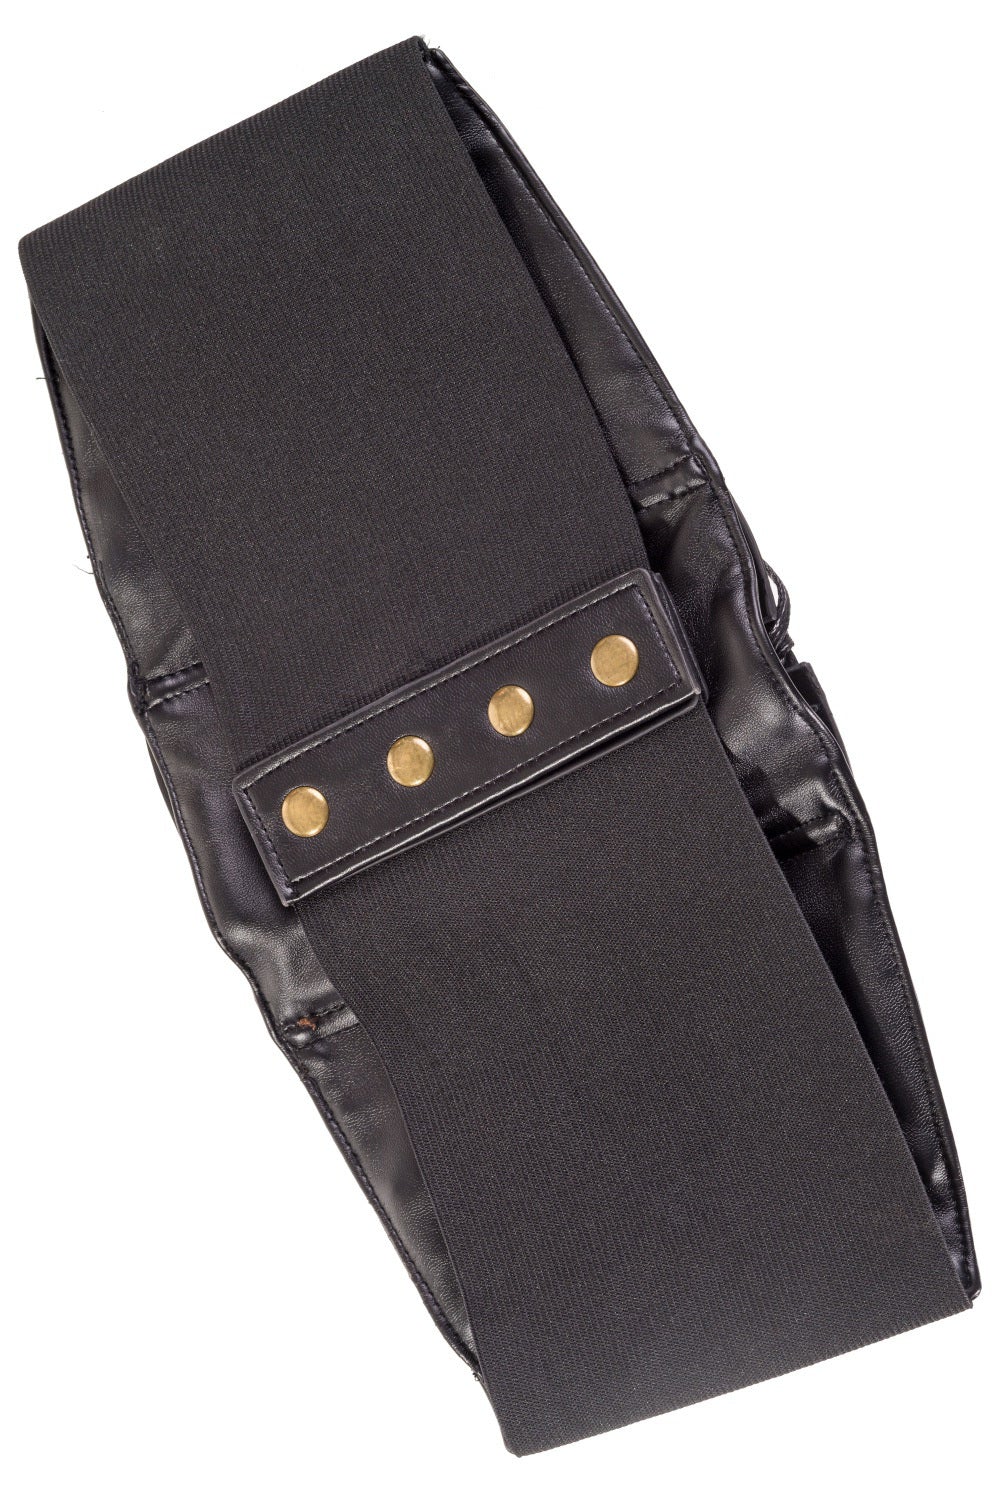 Banned Alternative Black Allure Waist Belt